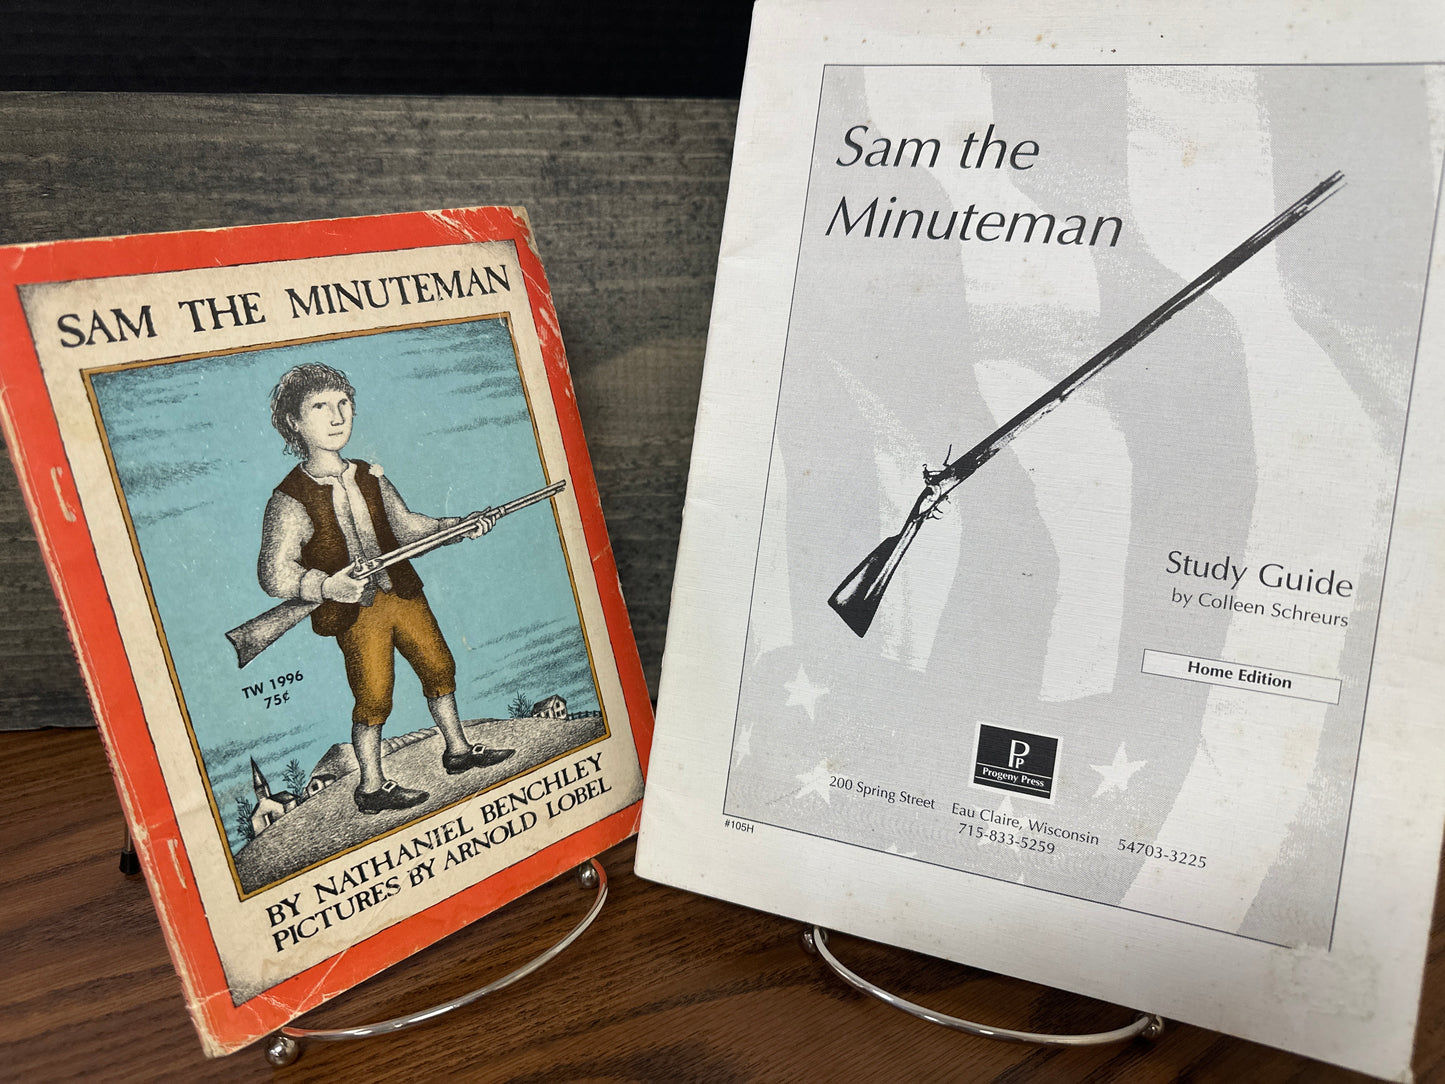 Sam the Minuteman study guide/book set